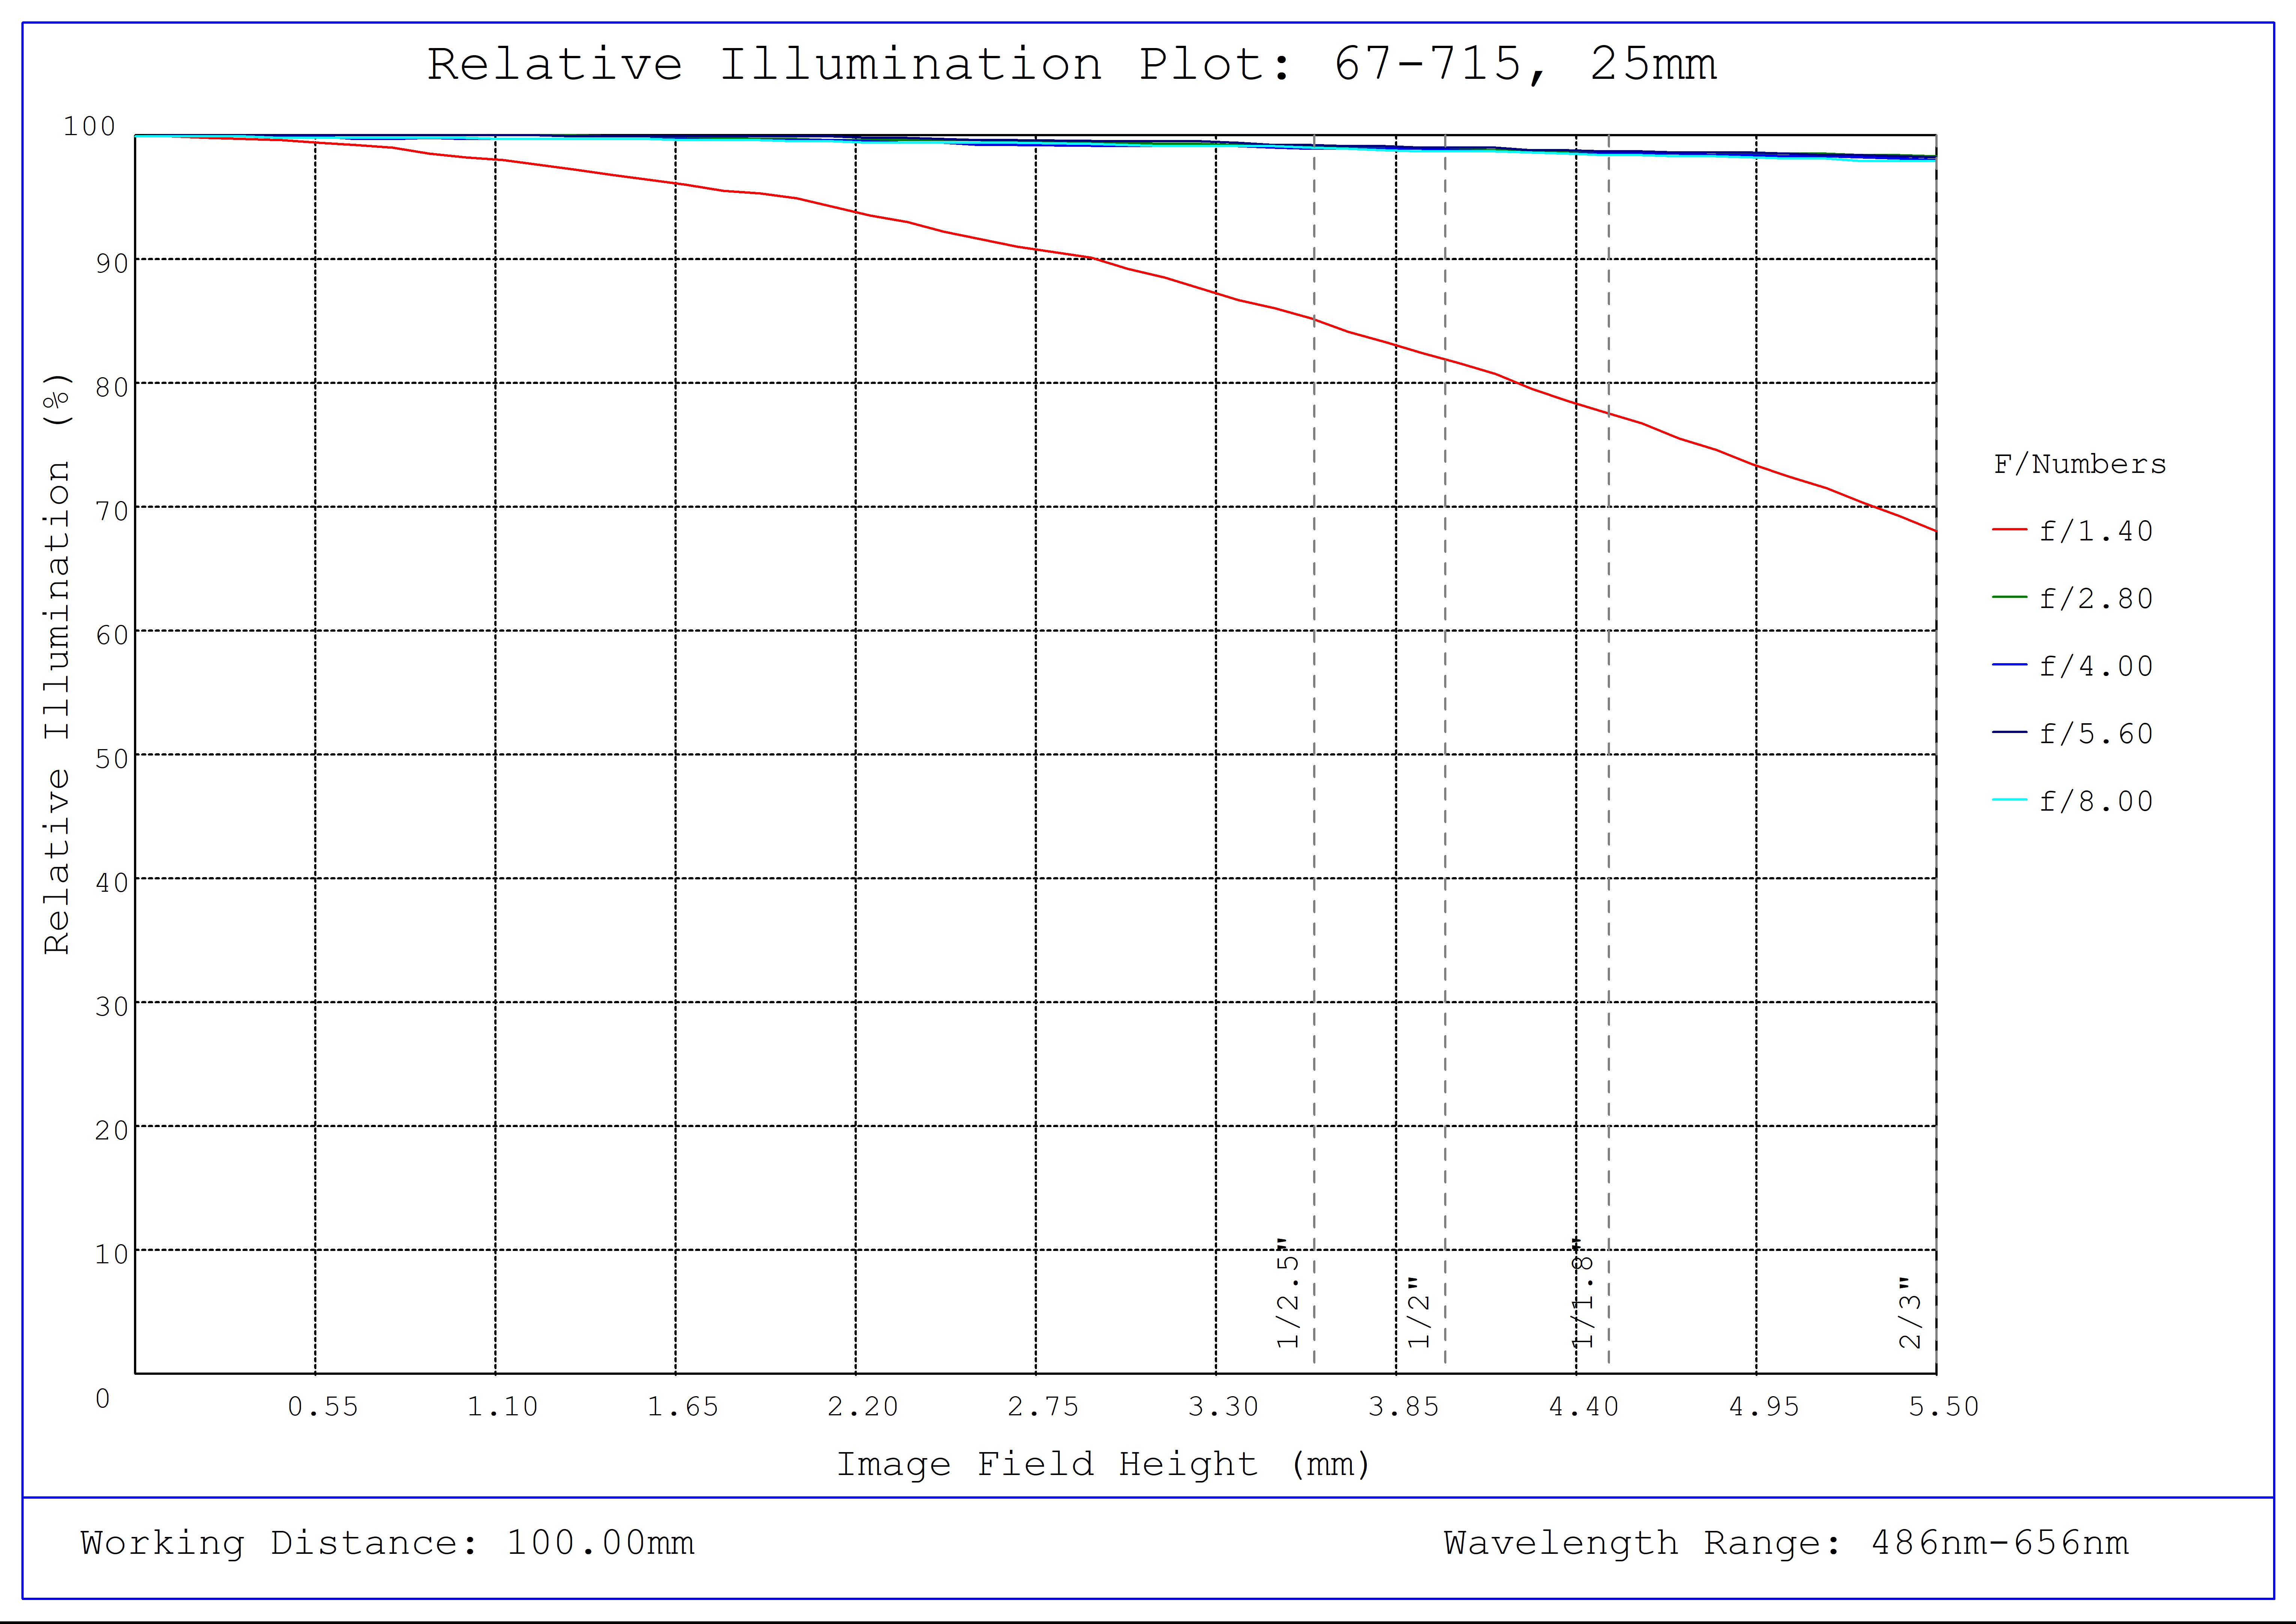 #67-715, 25mm C VIS-NIR Series Fixed Focal Length Lens, Relative Illumination Plot